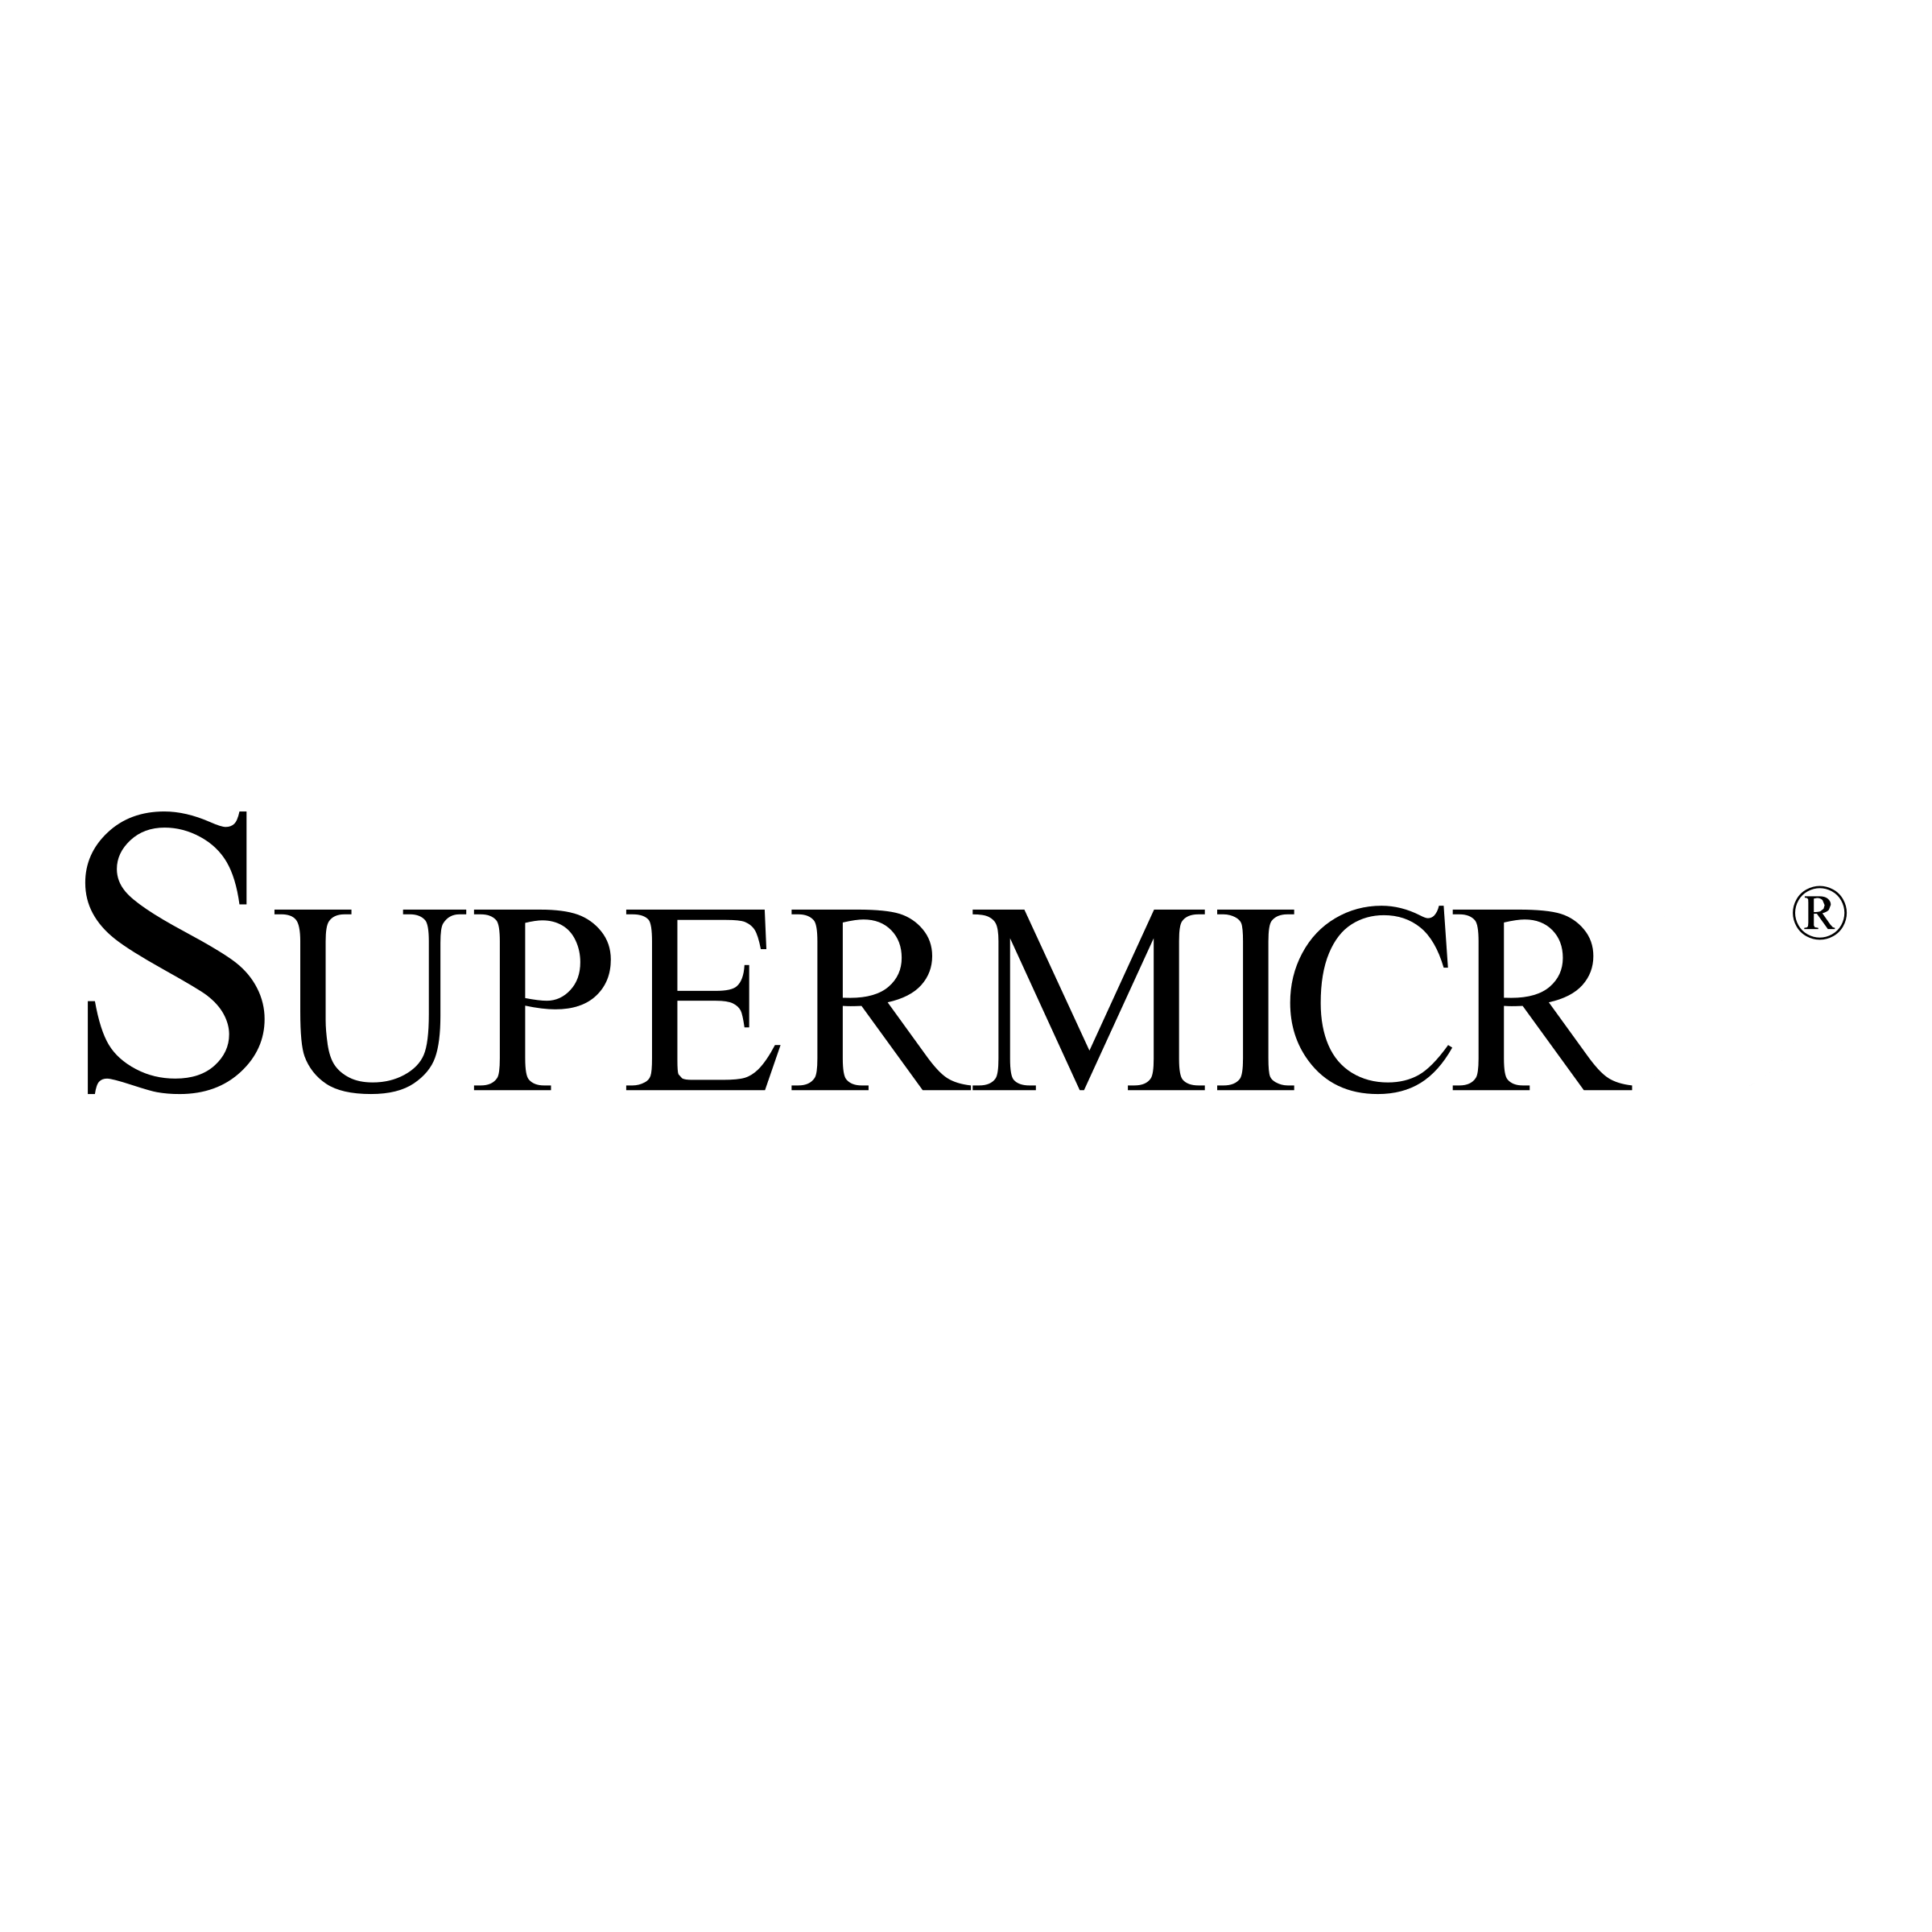 Supermicro Logo - SuperMicro Computer Logo PNG Transparent & SVG Vector - Freebie Supply